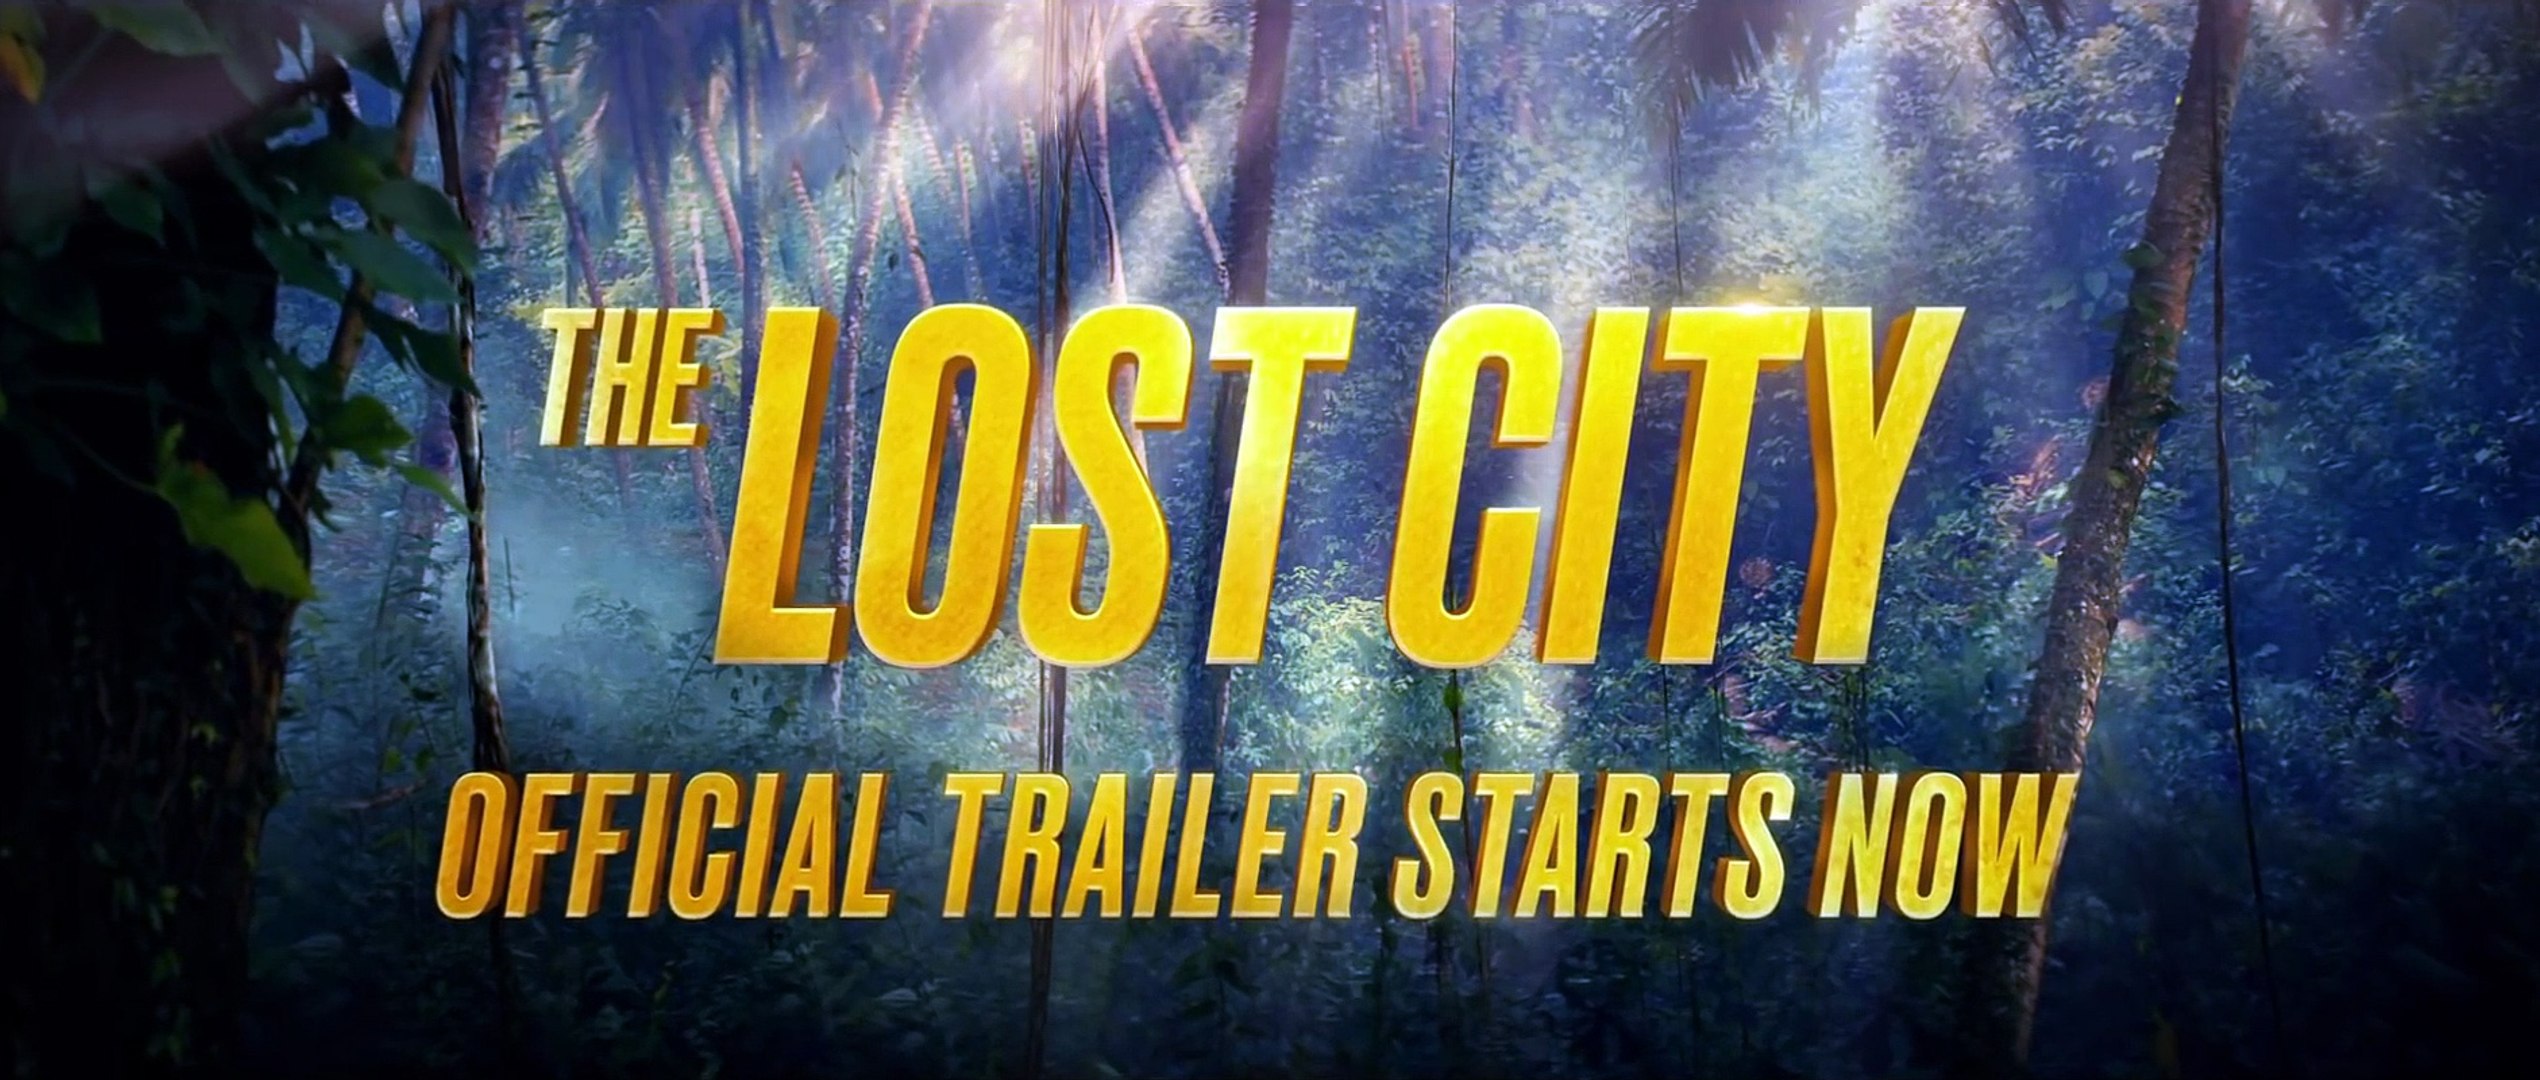 The Lost City - Official Trailer  Sandra Bullock, Channing Tatum